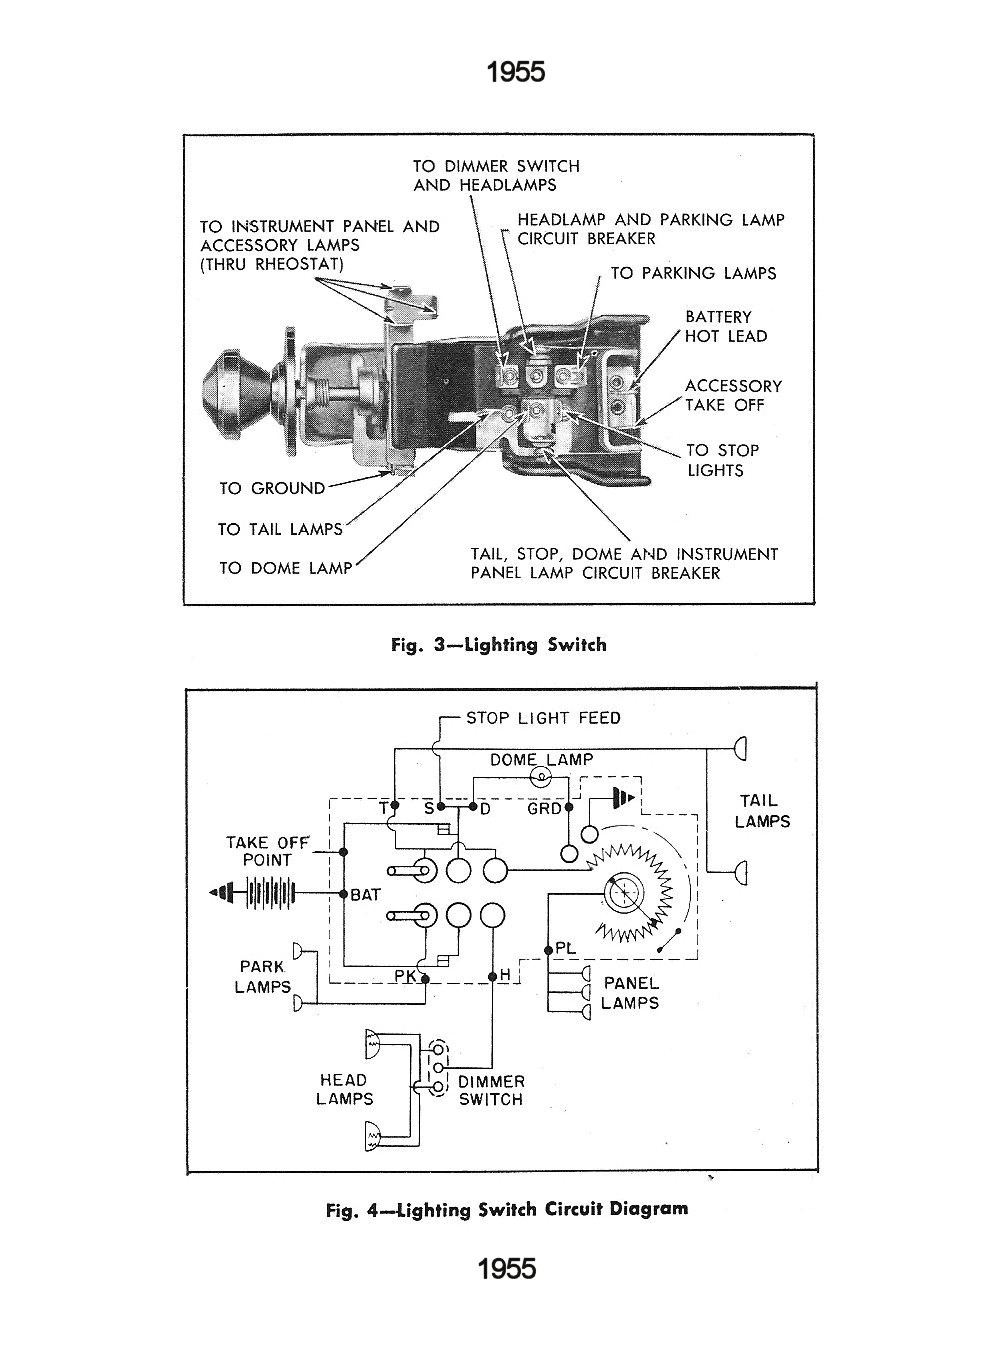 1950 ford Headlight Switch Wiring Diagram Wiring Diagram Headlight Switch Wiring Schematic Diagram